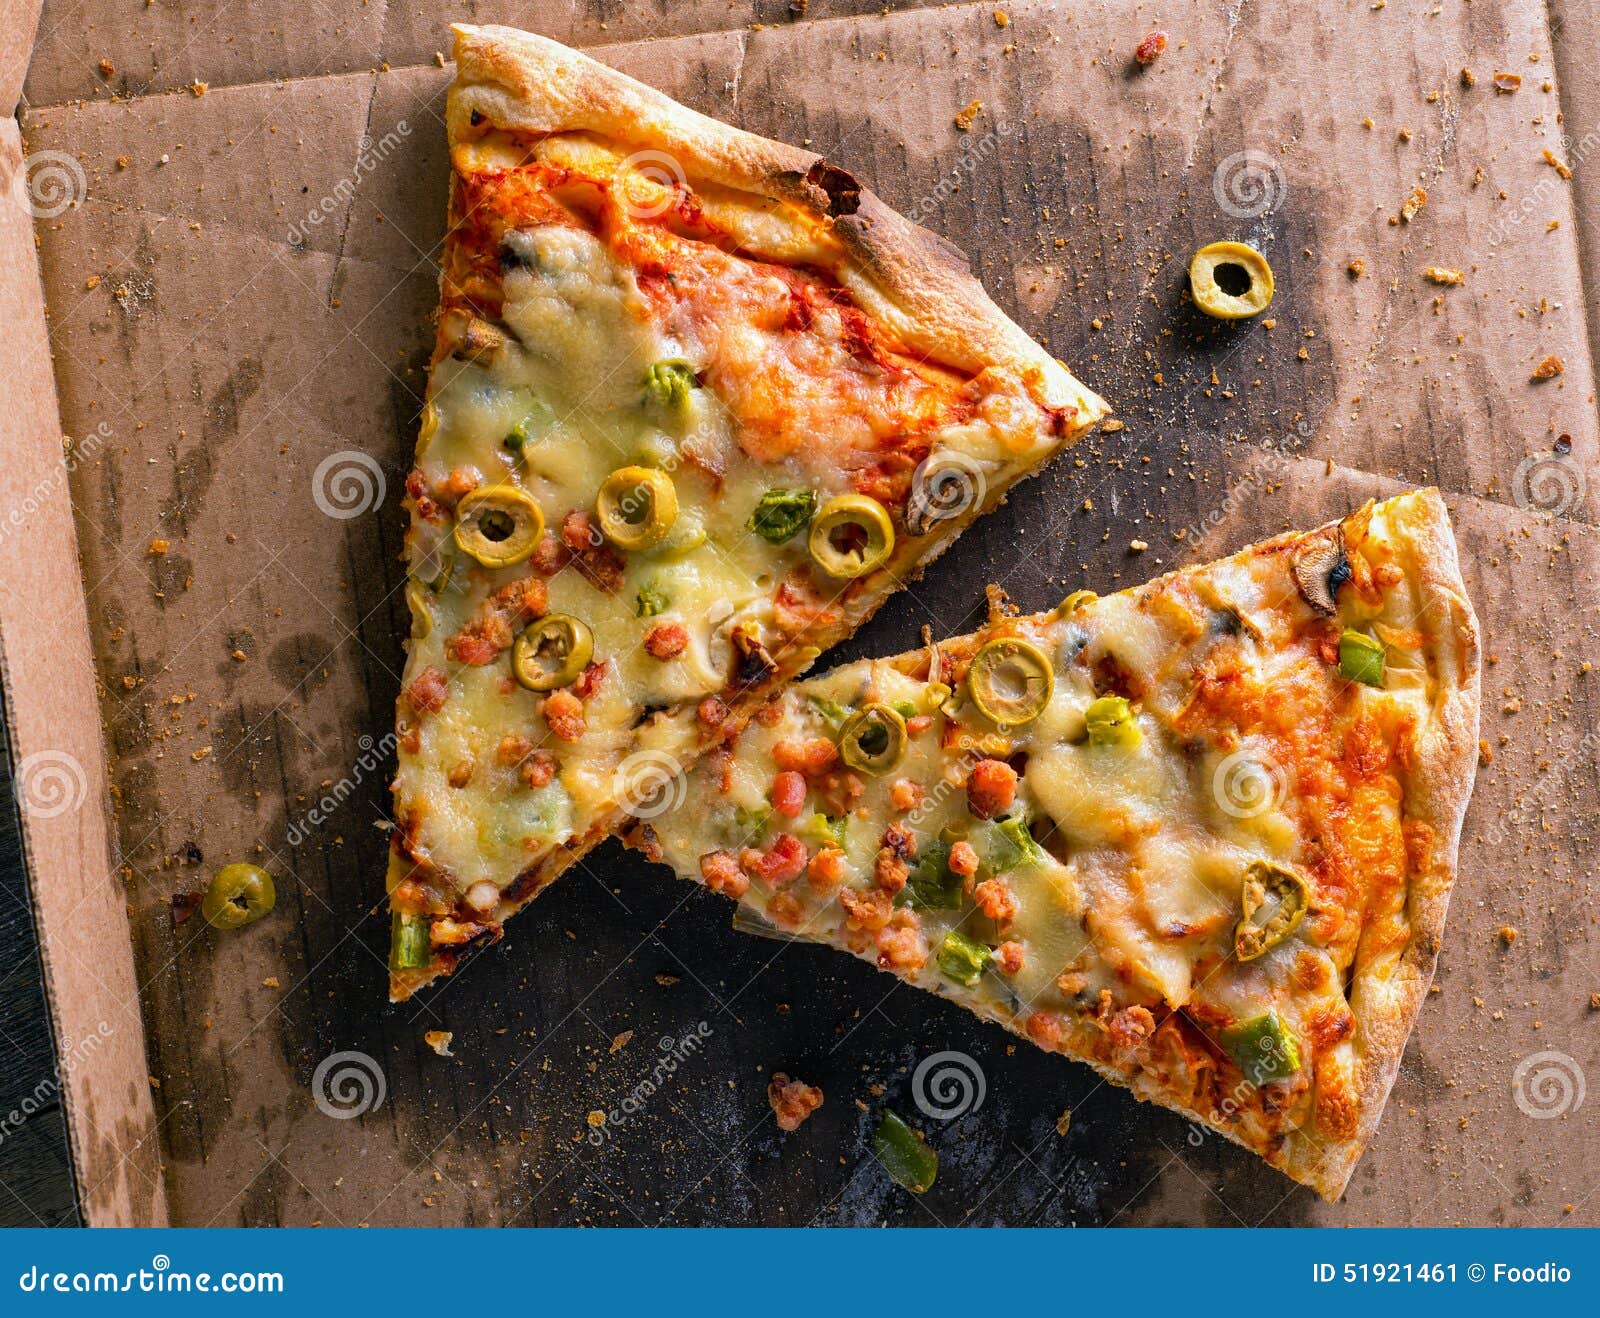 cold-leftover-pizza-slices-messy-delivery-box-51921461.jpg